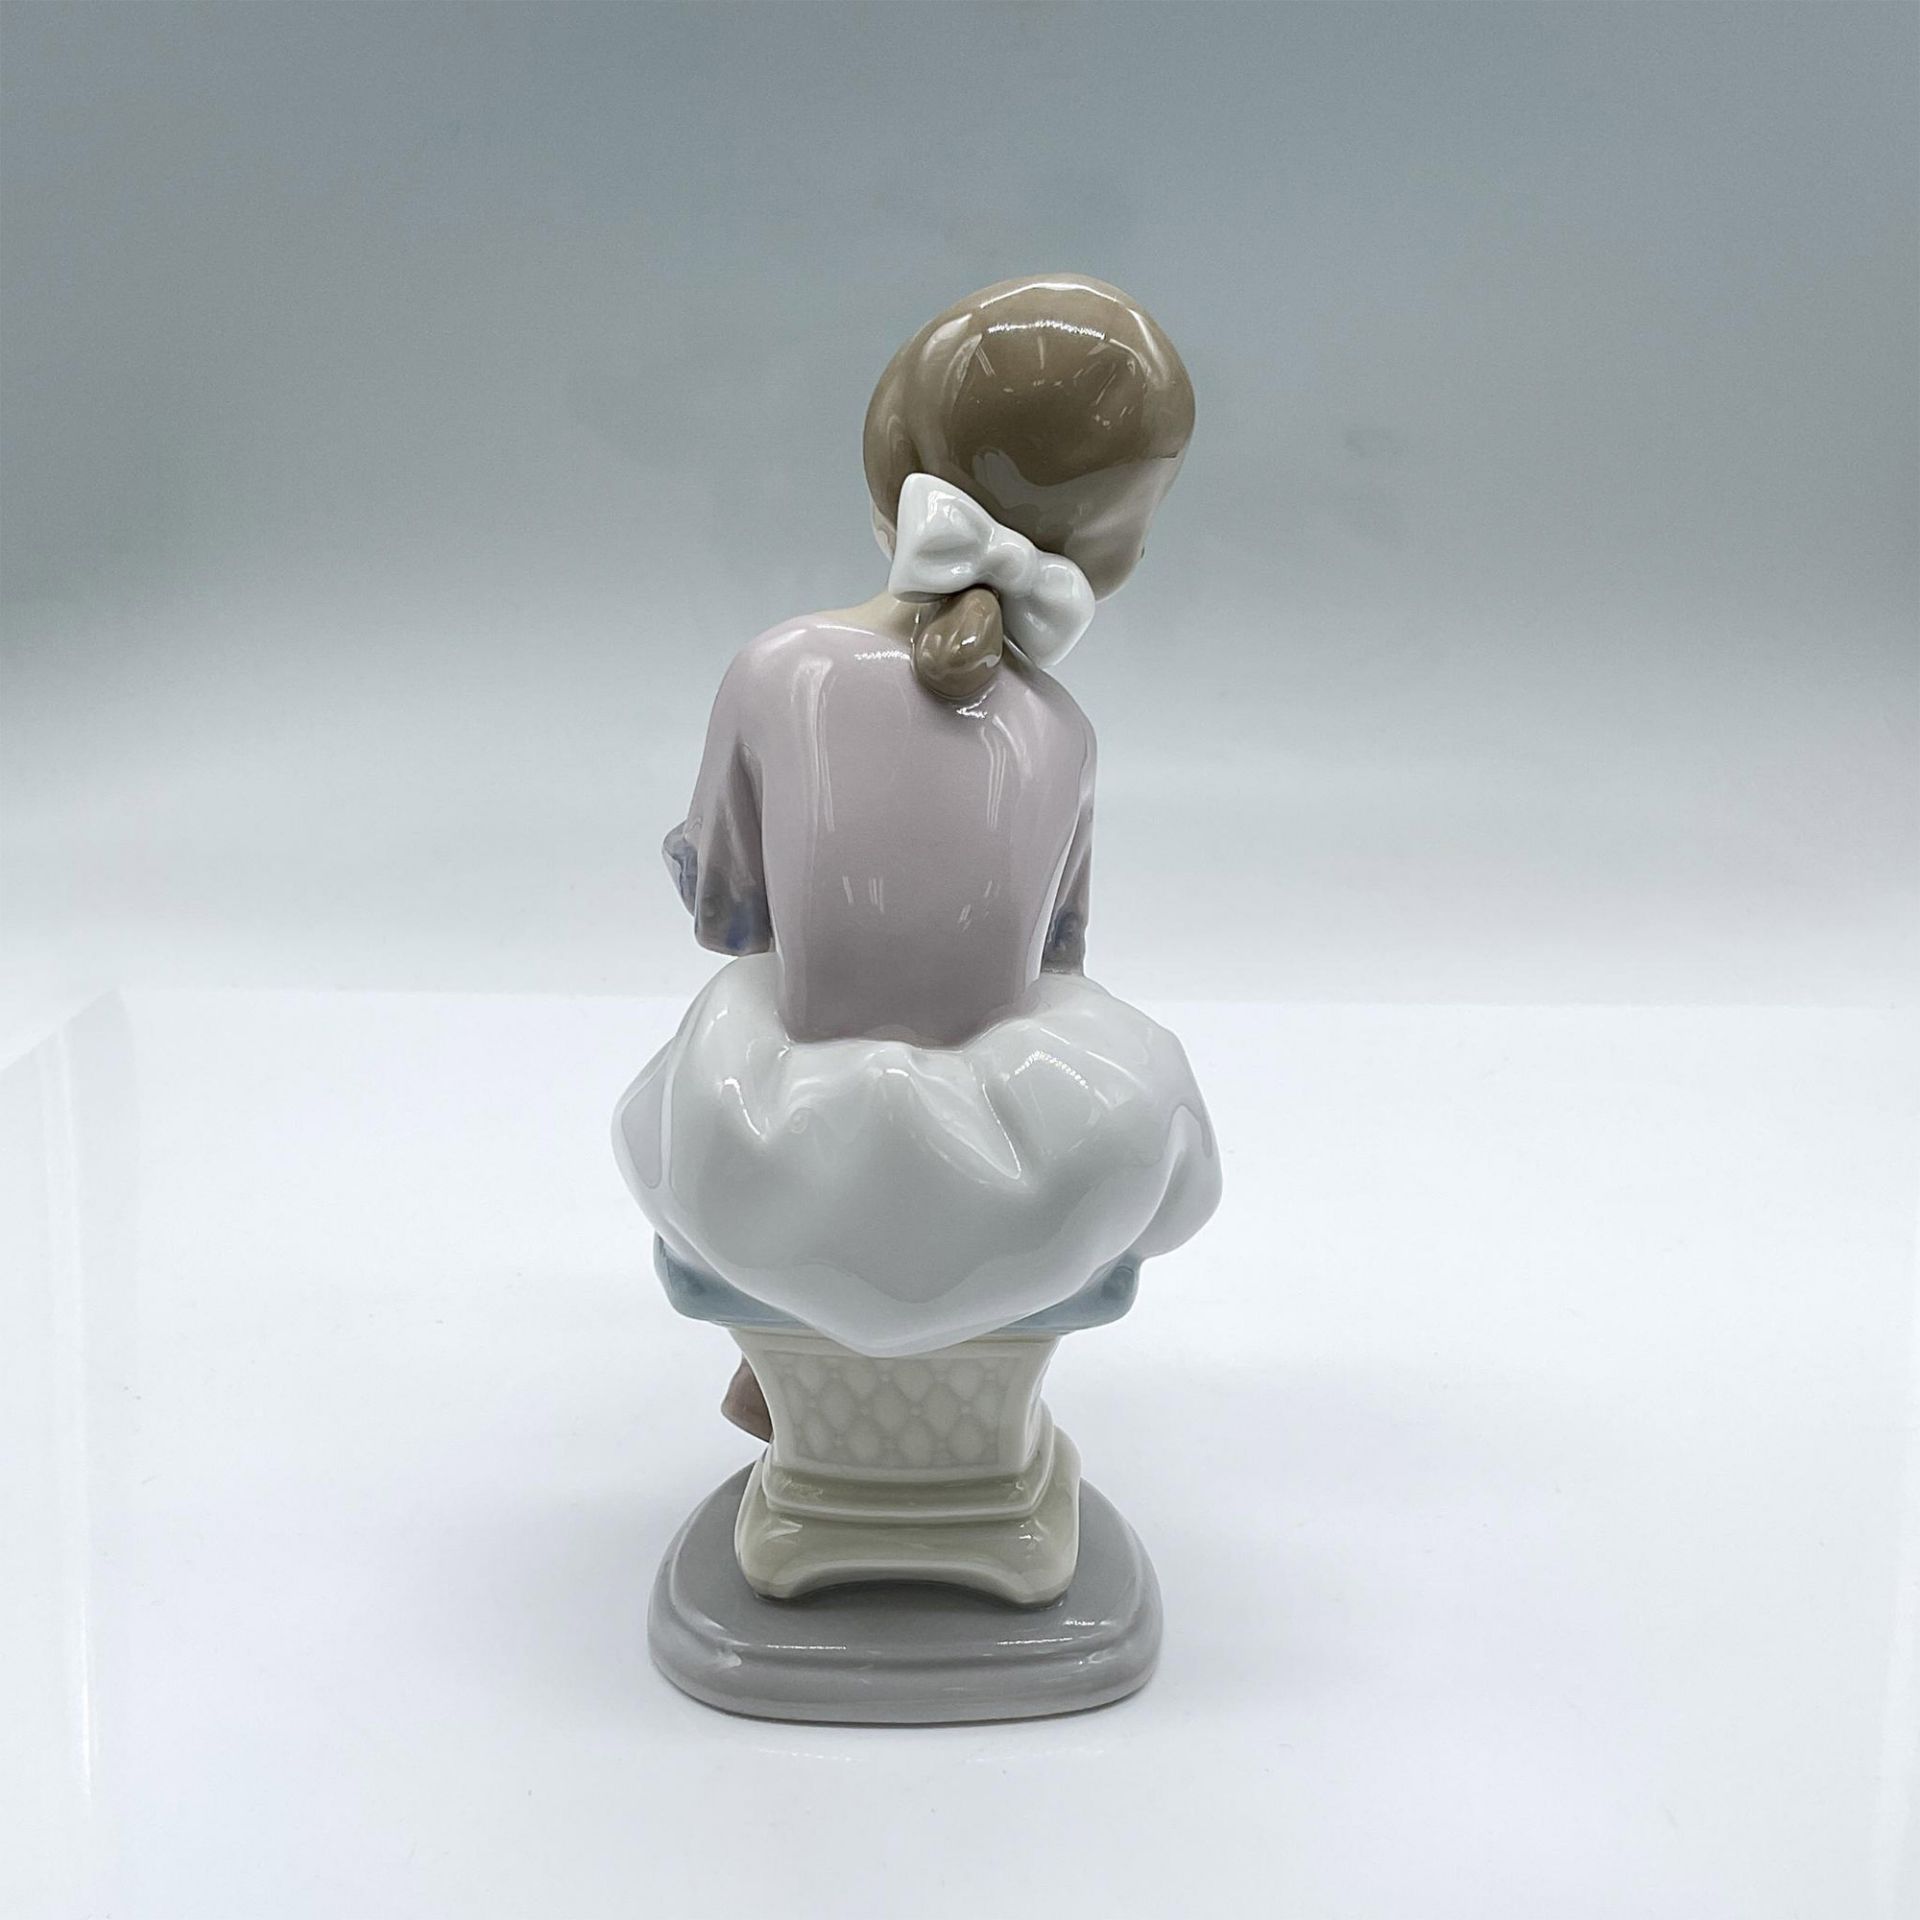 Best Friend 1007620 - Lladro Porcelain Figurine - Image 2 of 3